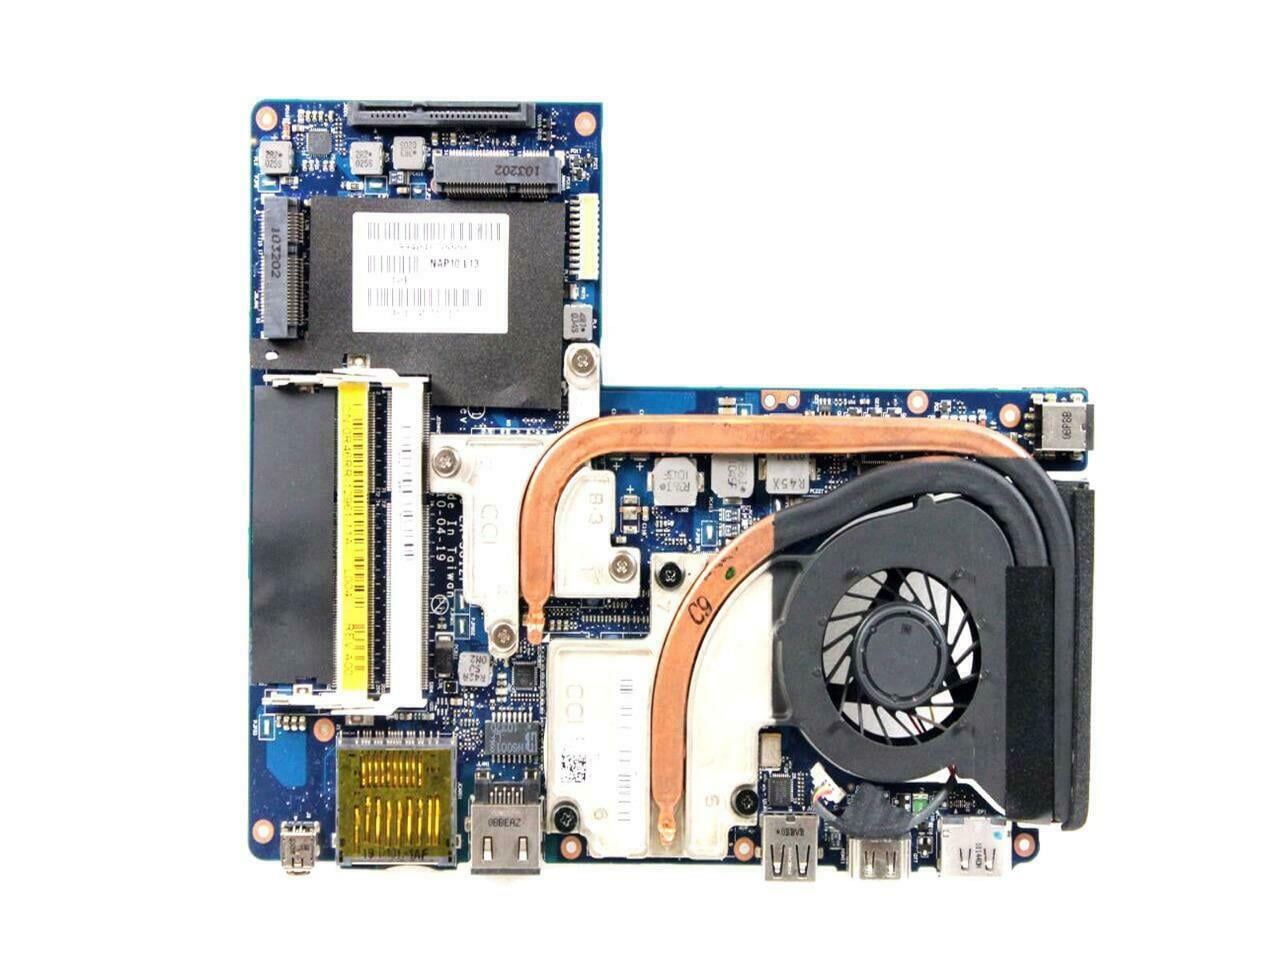 Dell Alienware M11x R2 Intel Integrated I3 380um 1 3ghz Laptop Motherboard R46rr Walmart Com